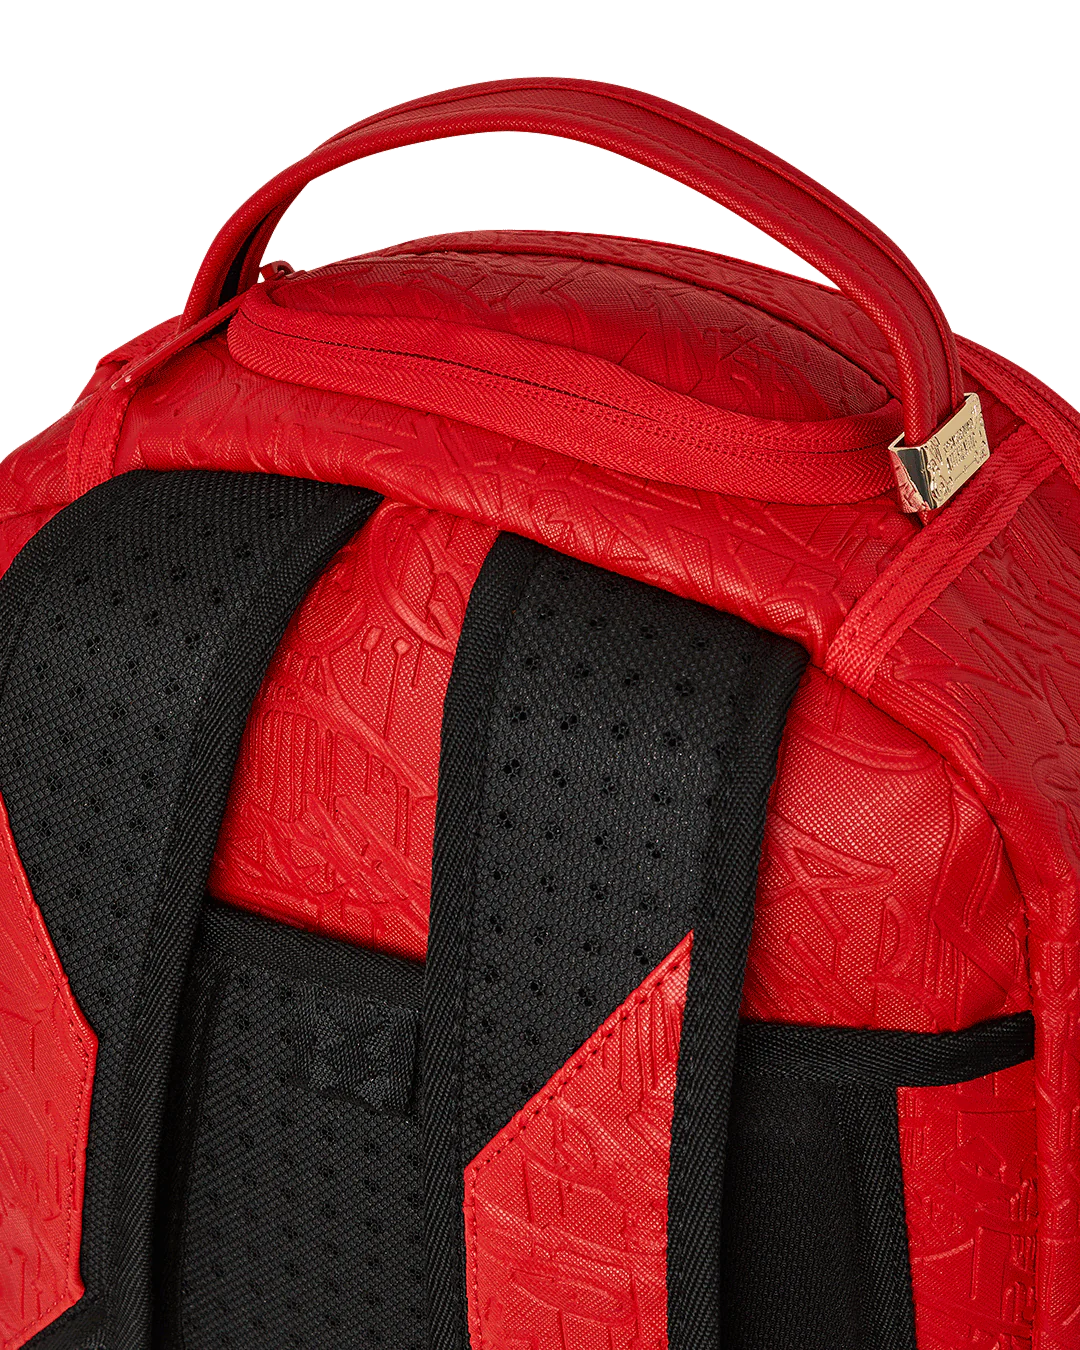 Duffel Bags Supreme Backpack - Louis Vuitton Transparent PNG